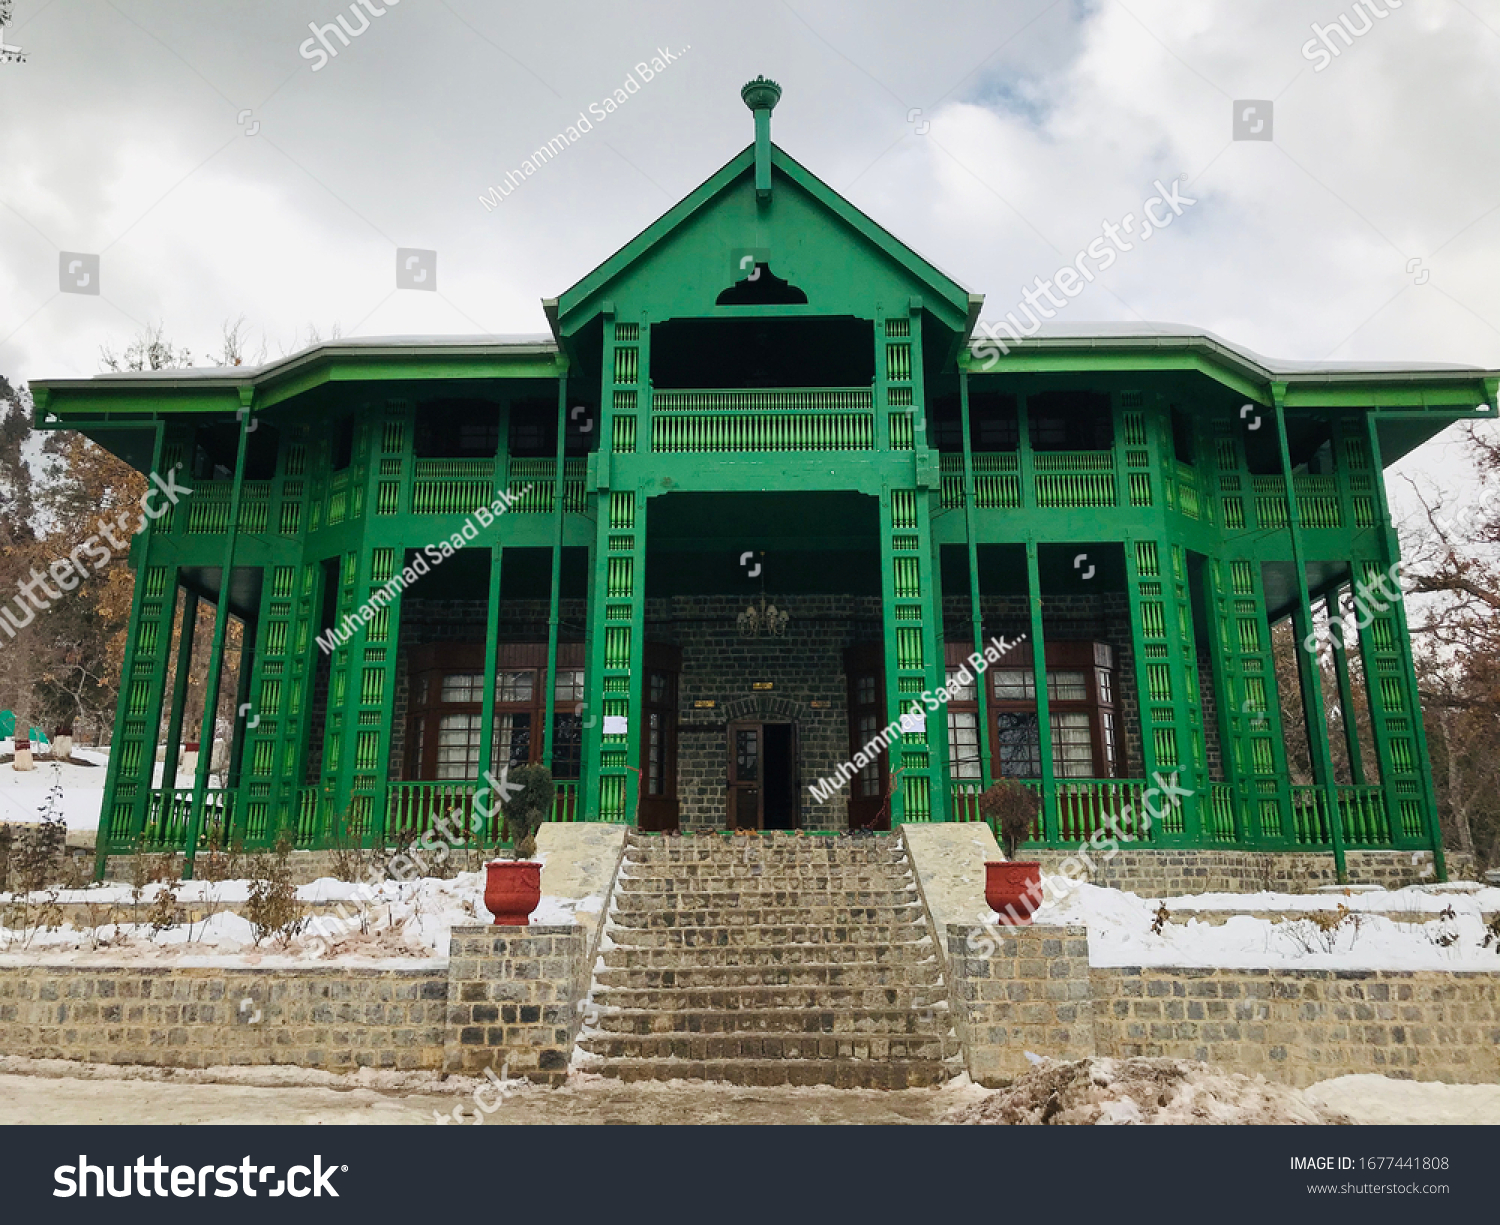 Image of Ziarat Residency / Quaid-e-Azam Residency Situated in Ziarat Balochistan Pakistan